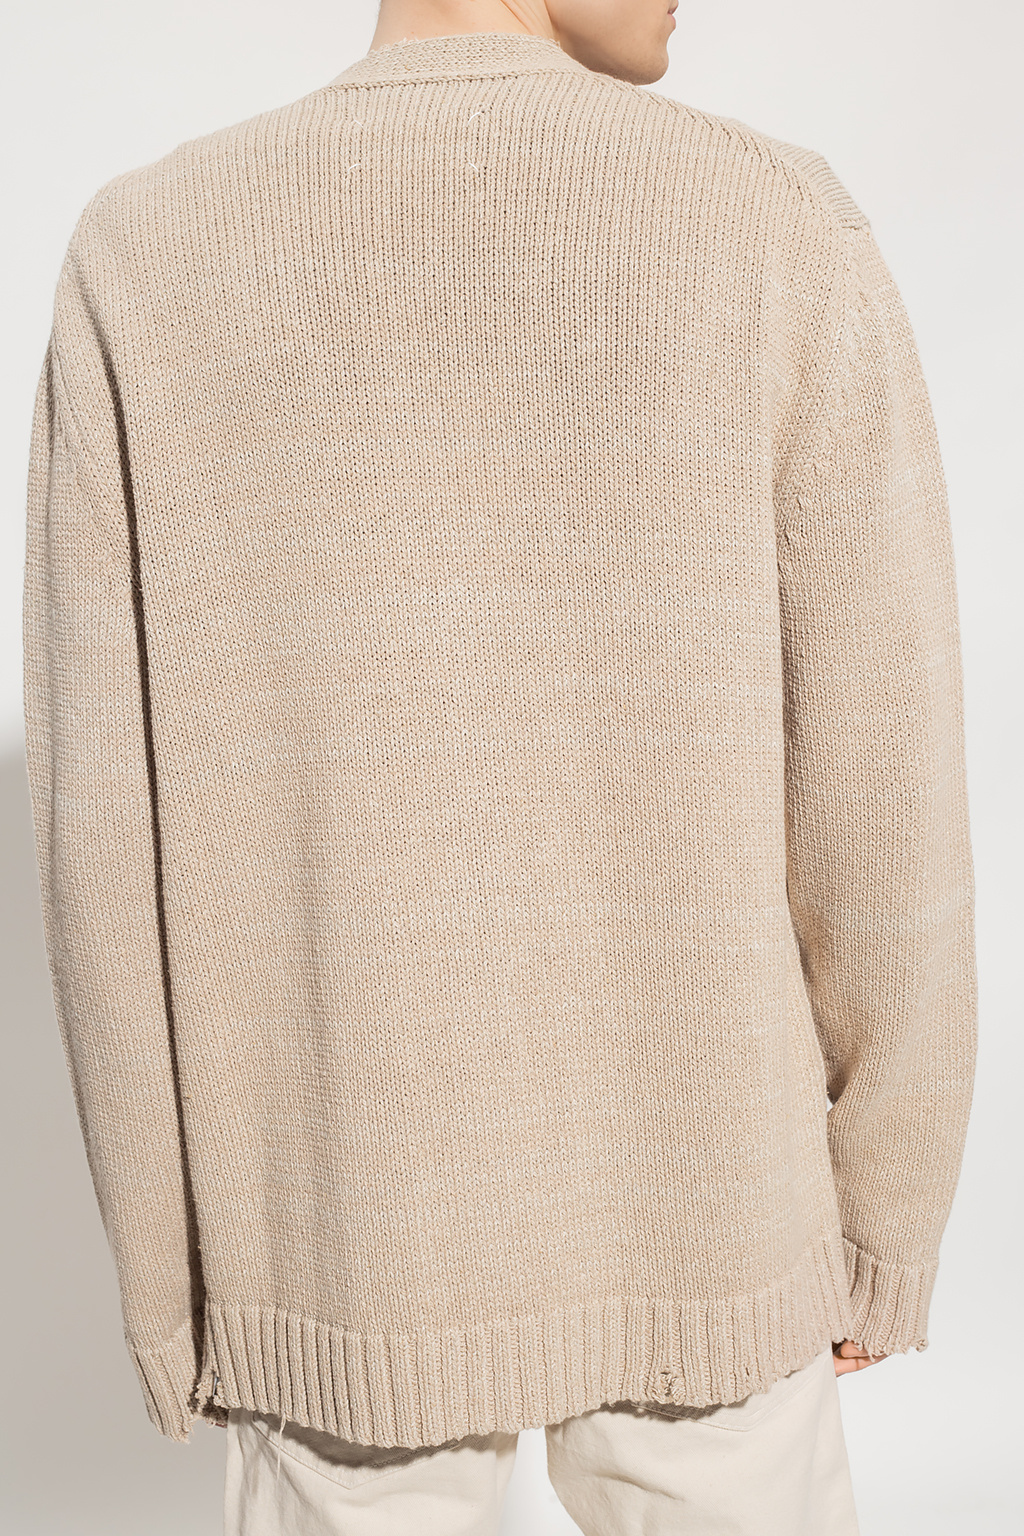 Maison Margiela half-zip knitted sweater